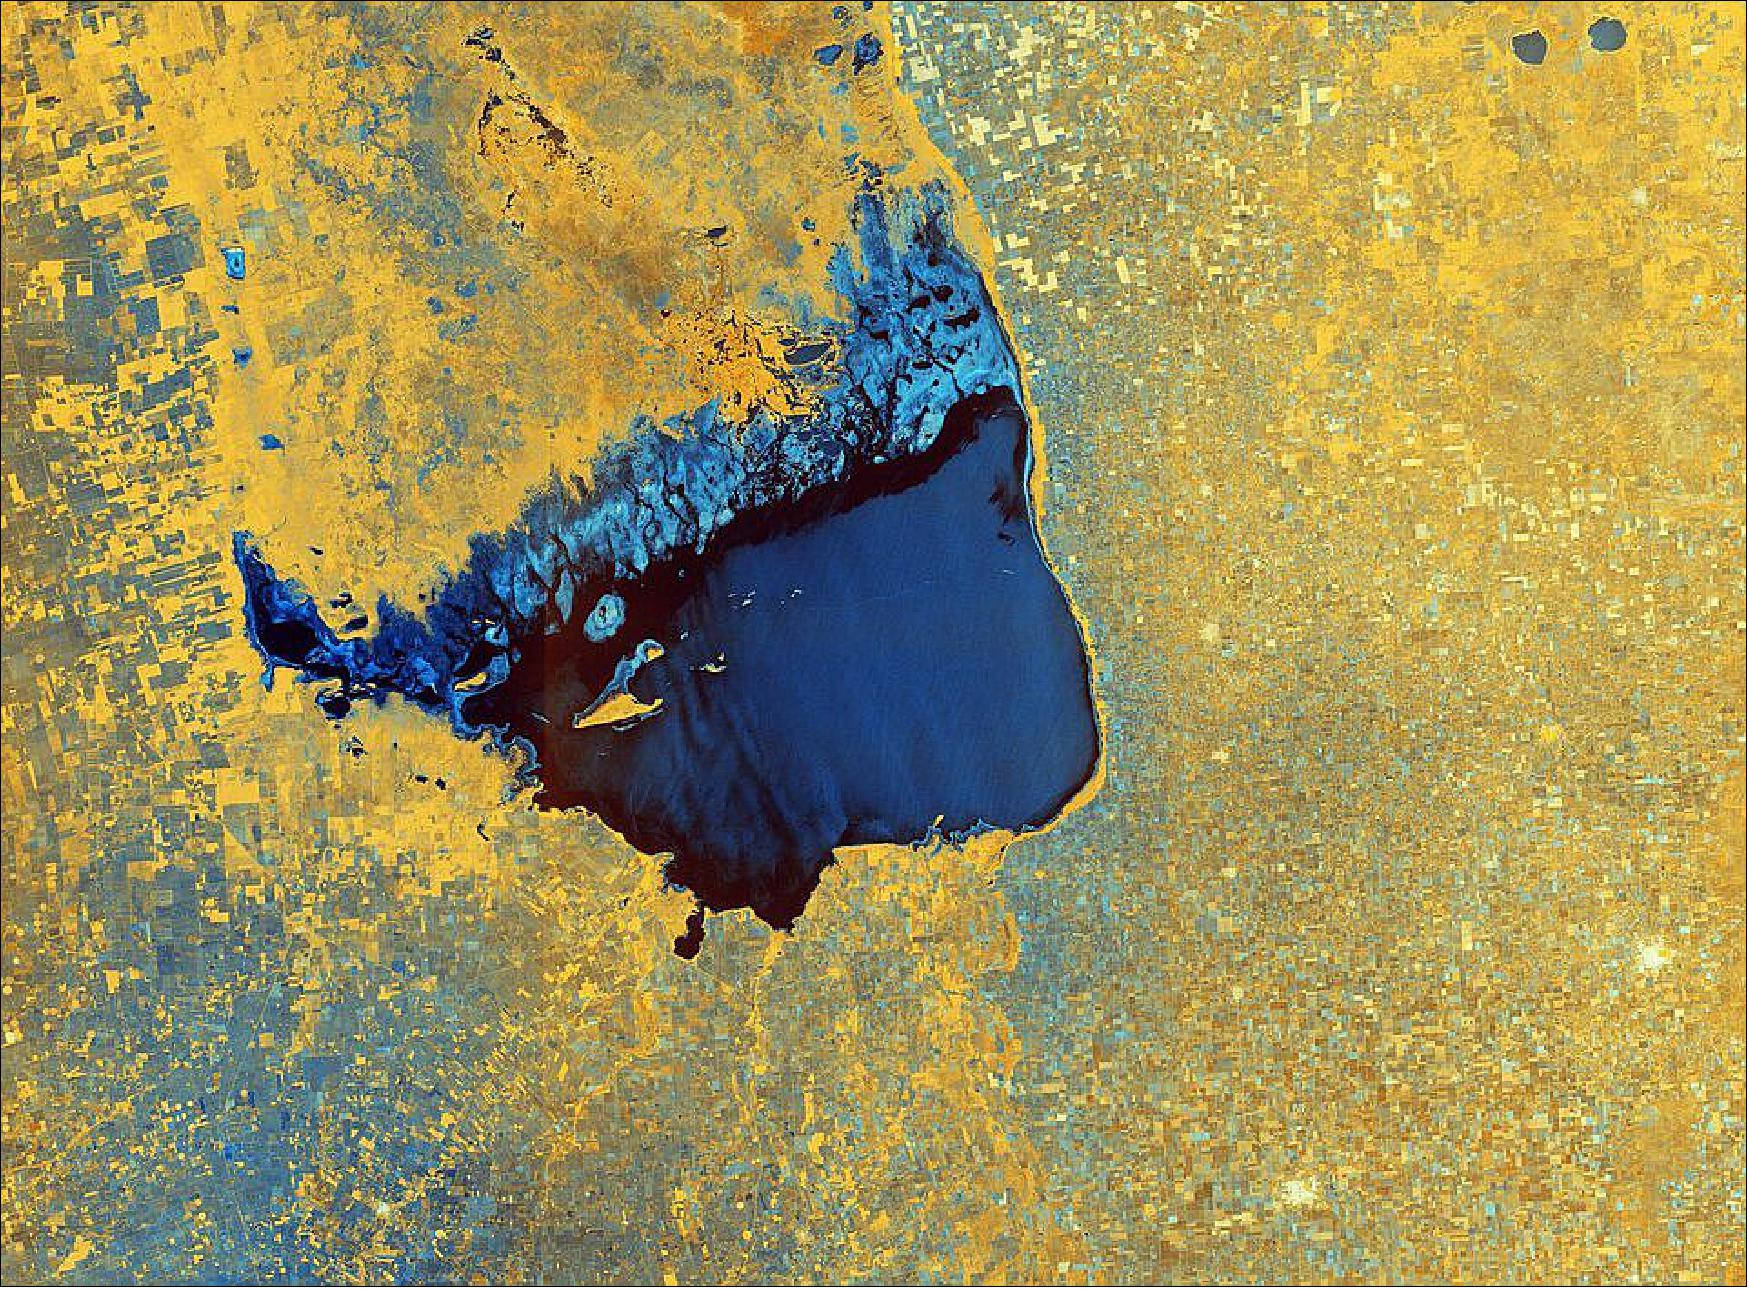 38: Radar image of Lake Mar Chiquita, Argentina